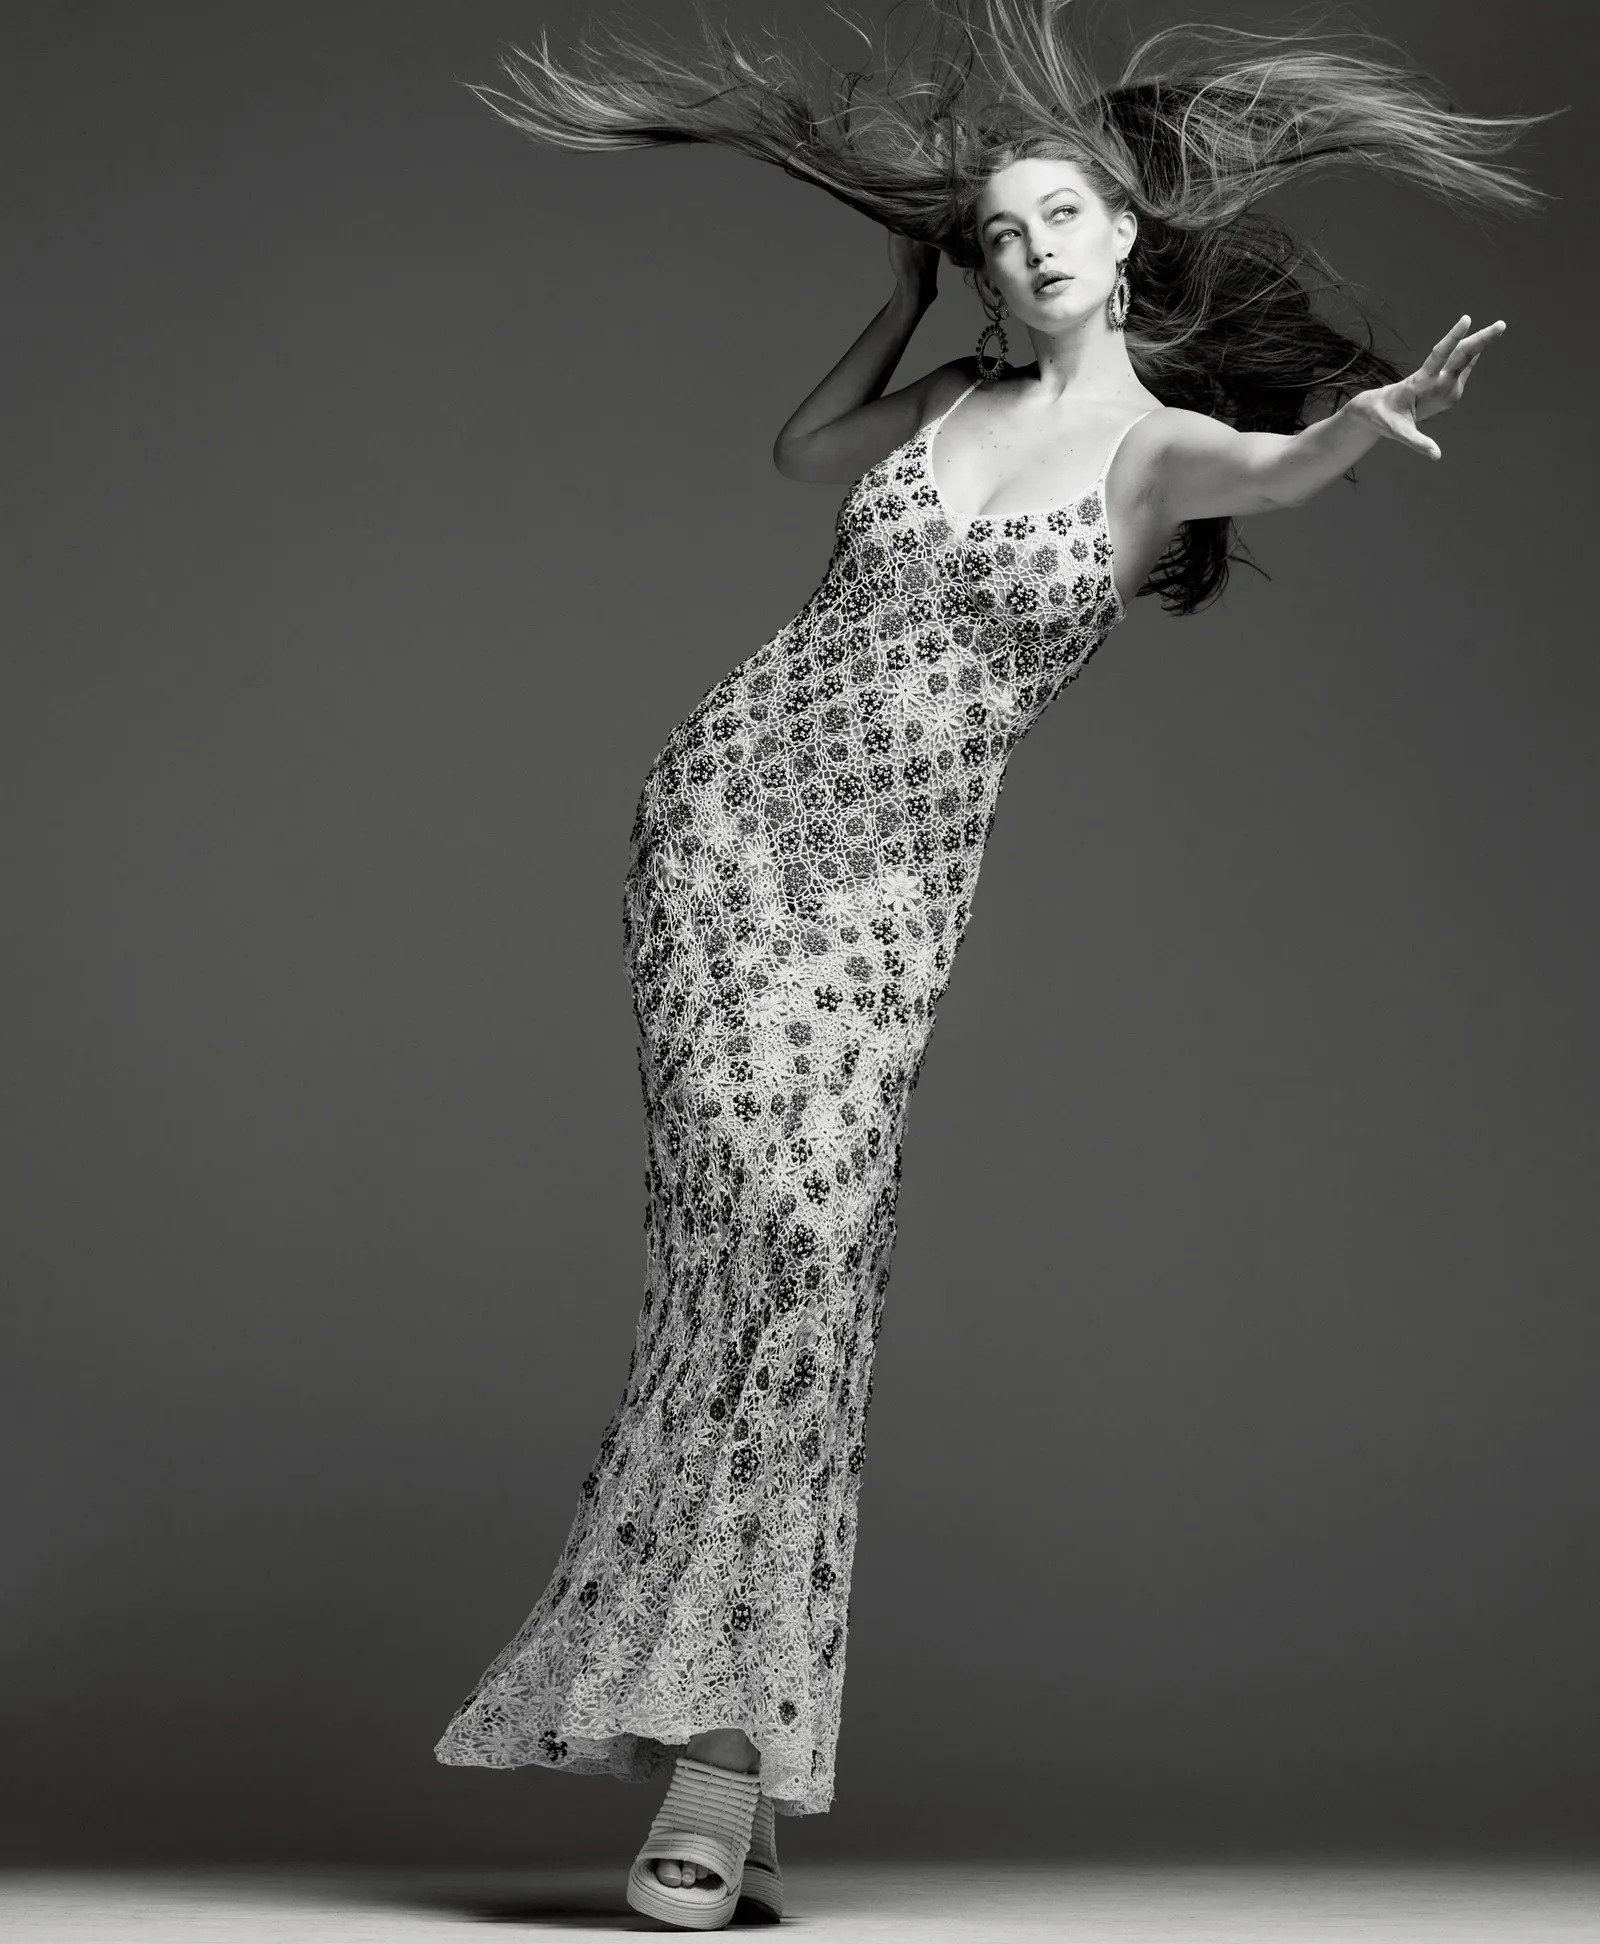 FOTOS Gigi Hadid est de vuelta en Vogue! - Photo 4